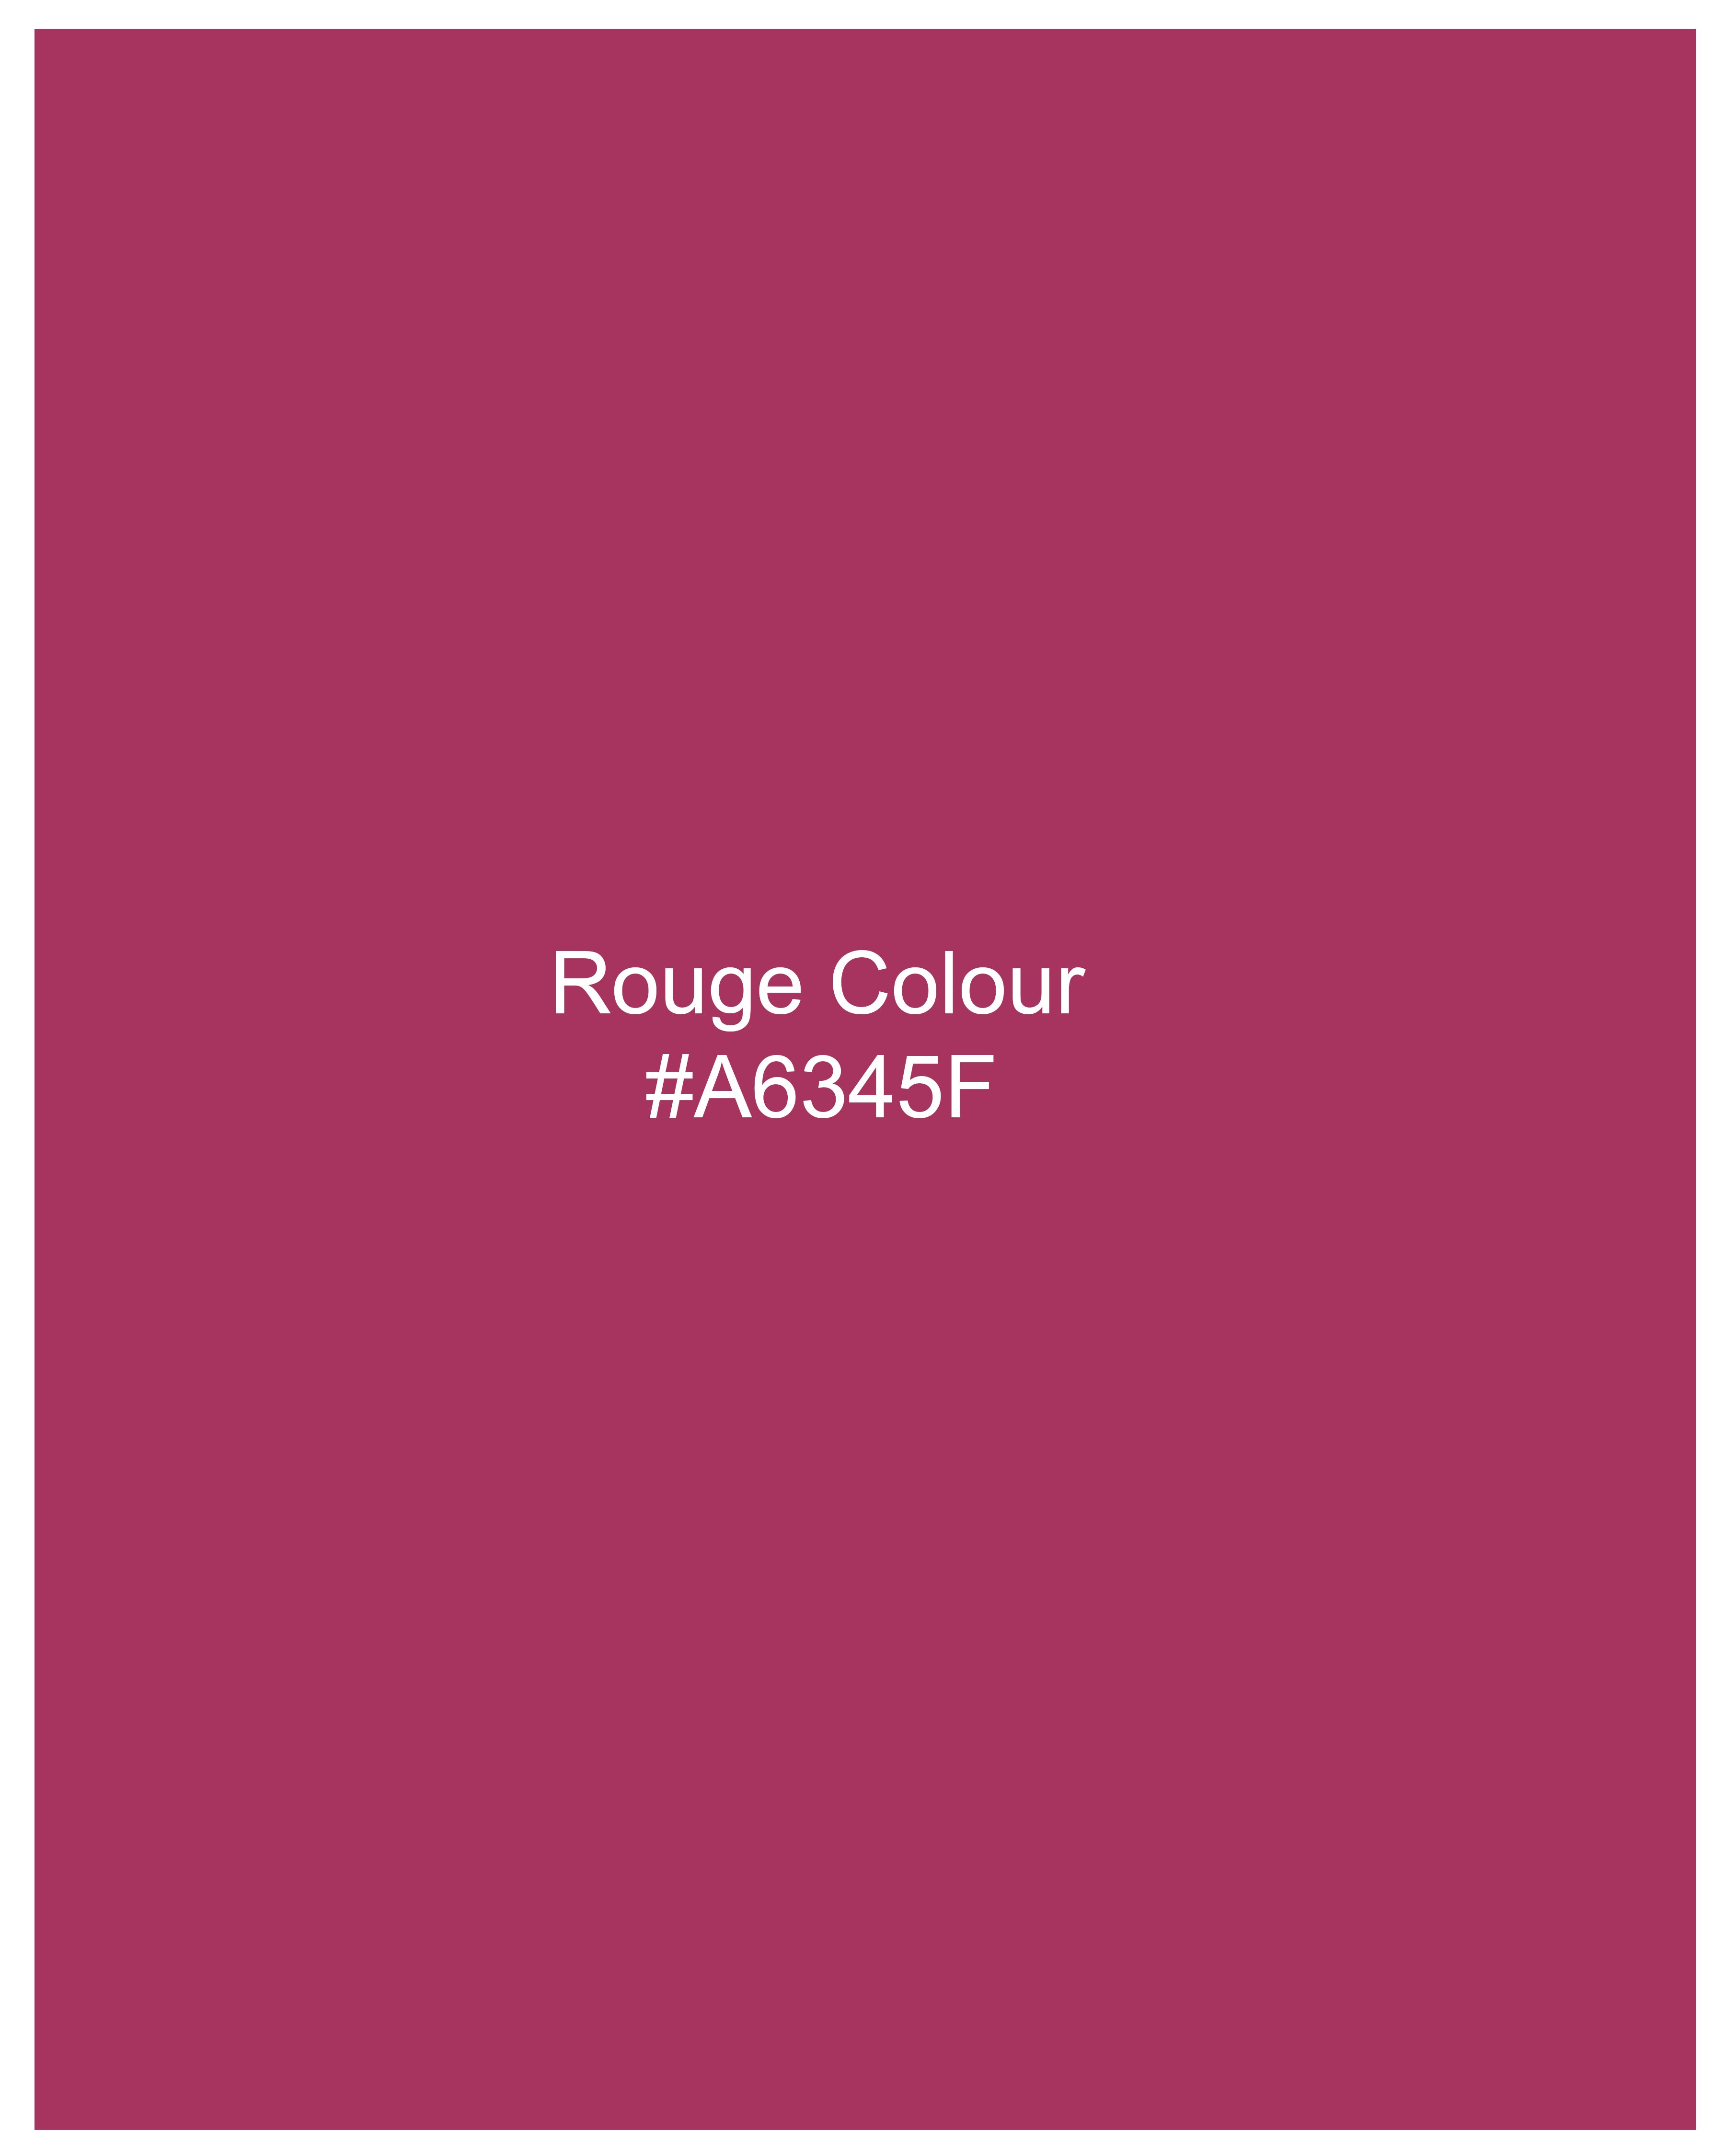 Rogue Pink Super Soft Premium Cotton Shirt  8839-BLK-38,8839-BLK-H-38,8839-BLK-39,8839-BLK-H-39,8839-BLK-40,8839-BLK-H-40,8839-BLK-42,8839-BLK-H-42,8839-BLK-44,8839-BLK-H-44,8839-BLK-46,8839-BLK-H-46,8839-BLK-48,8839-BLK-H-48,8839-BLK-50,8839-BLK-H-50,8839-BLK-52,8839-BLK-H-52